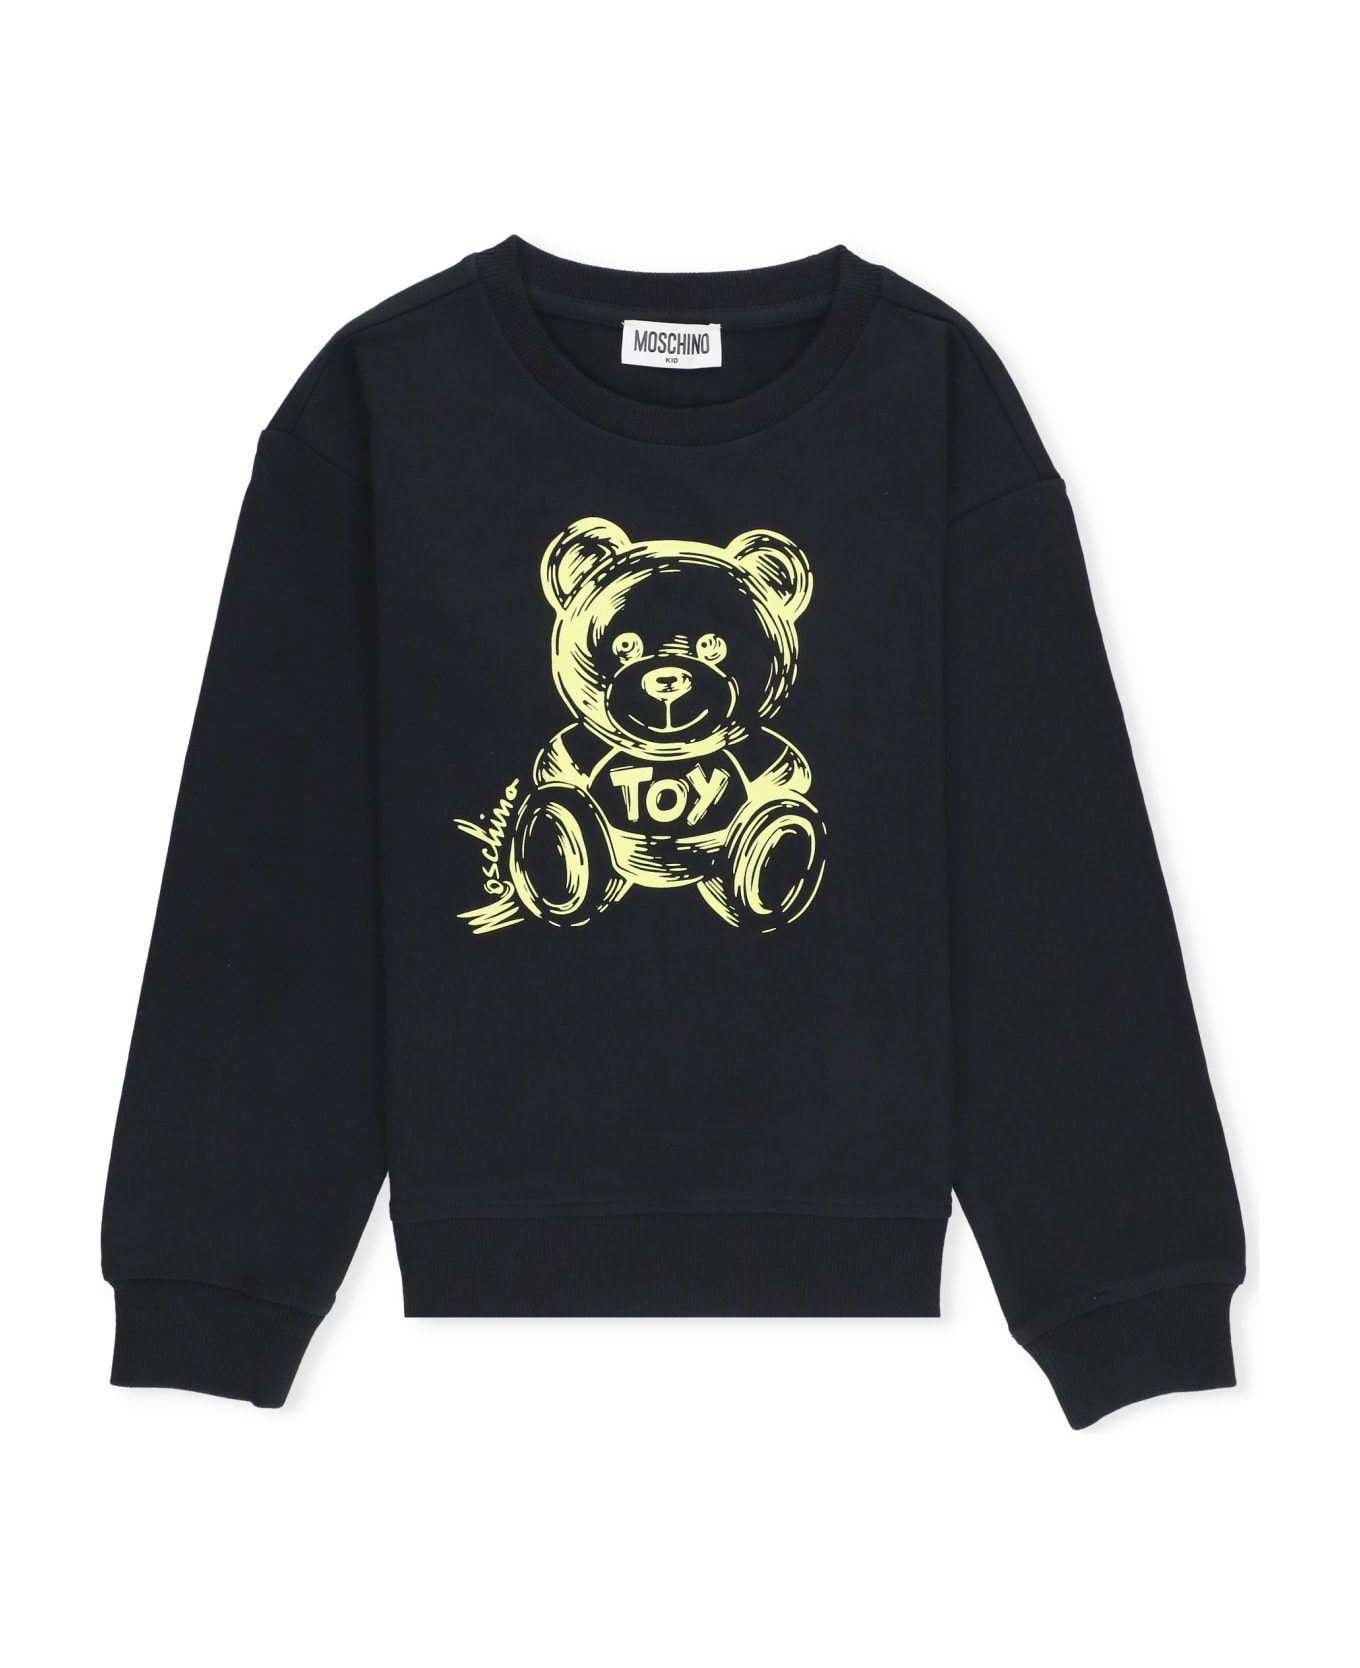 Moschino Sweatshirt With Print - Black